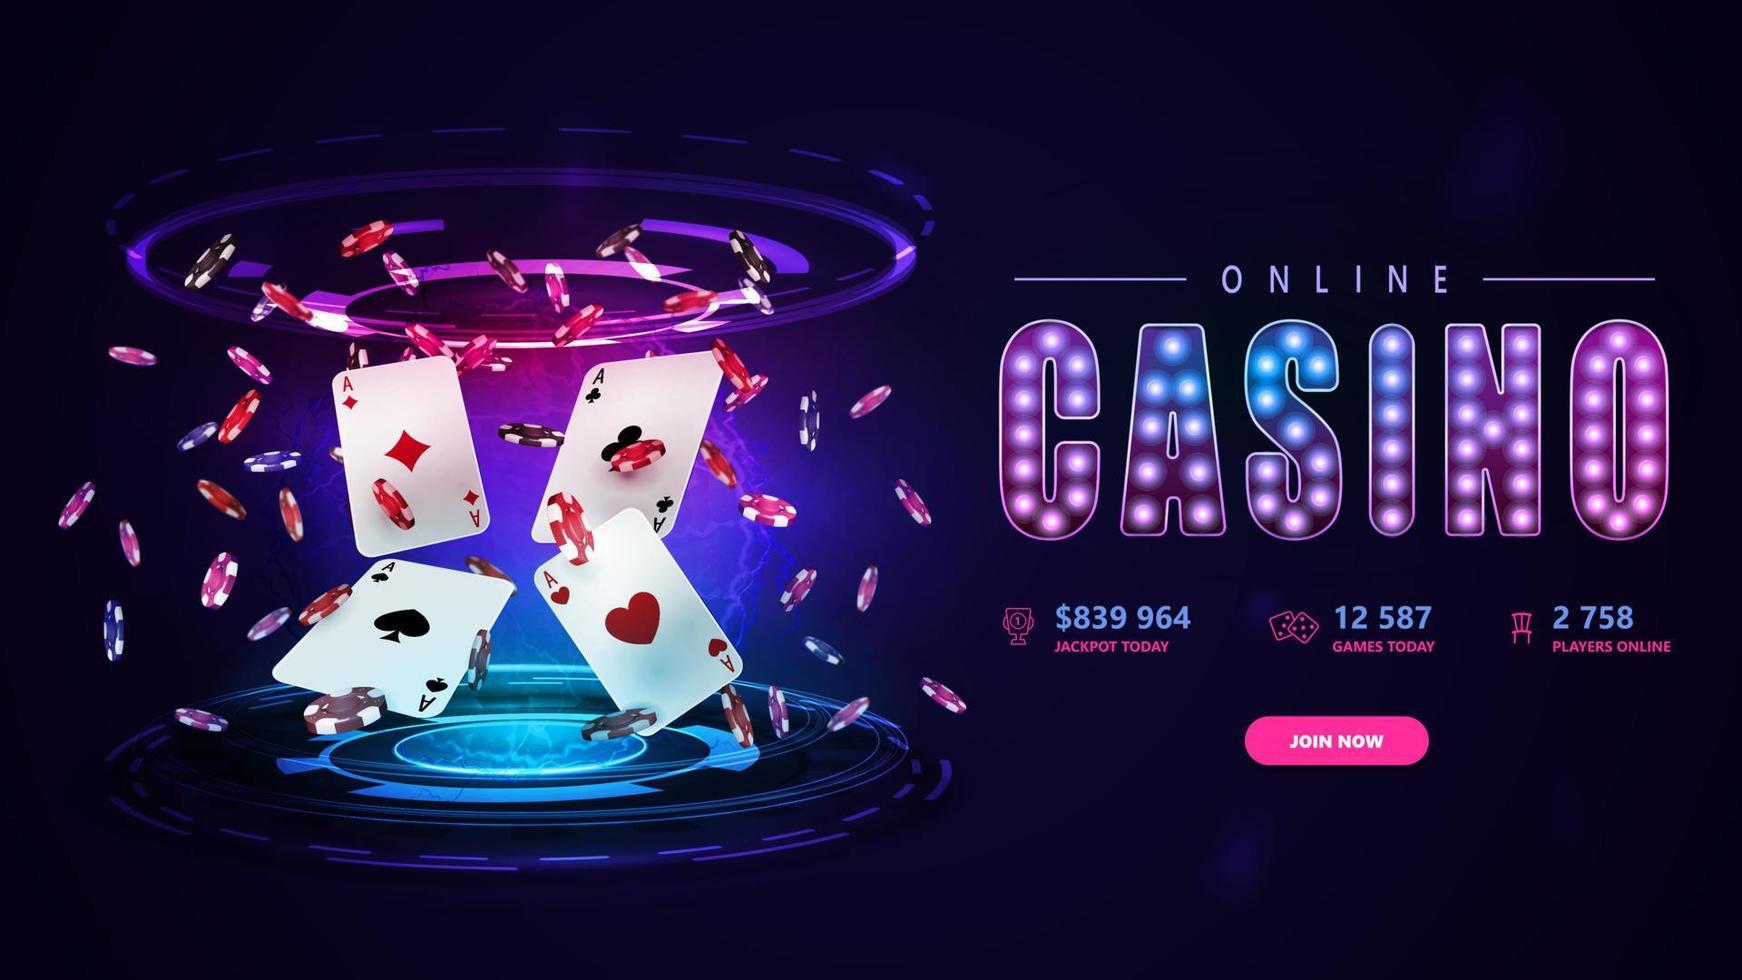 Online Casinos Vs The Traditional Casino